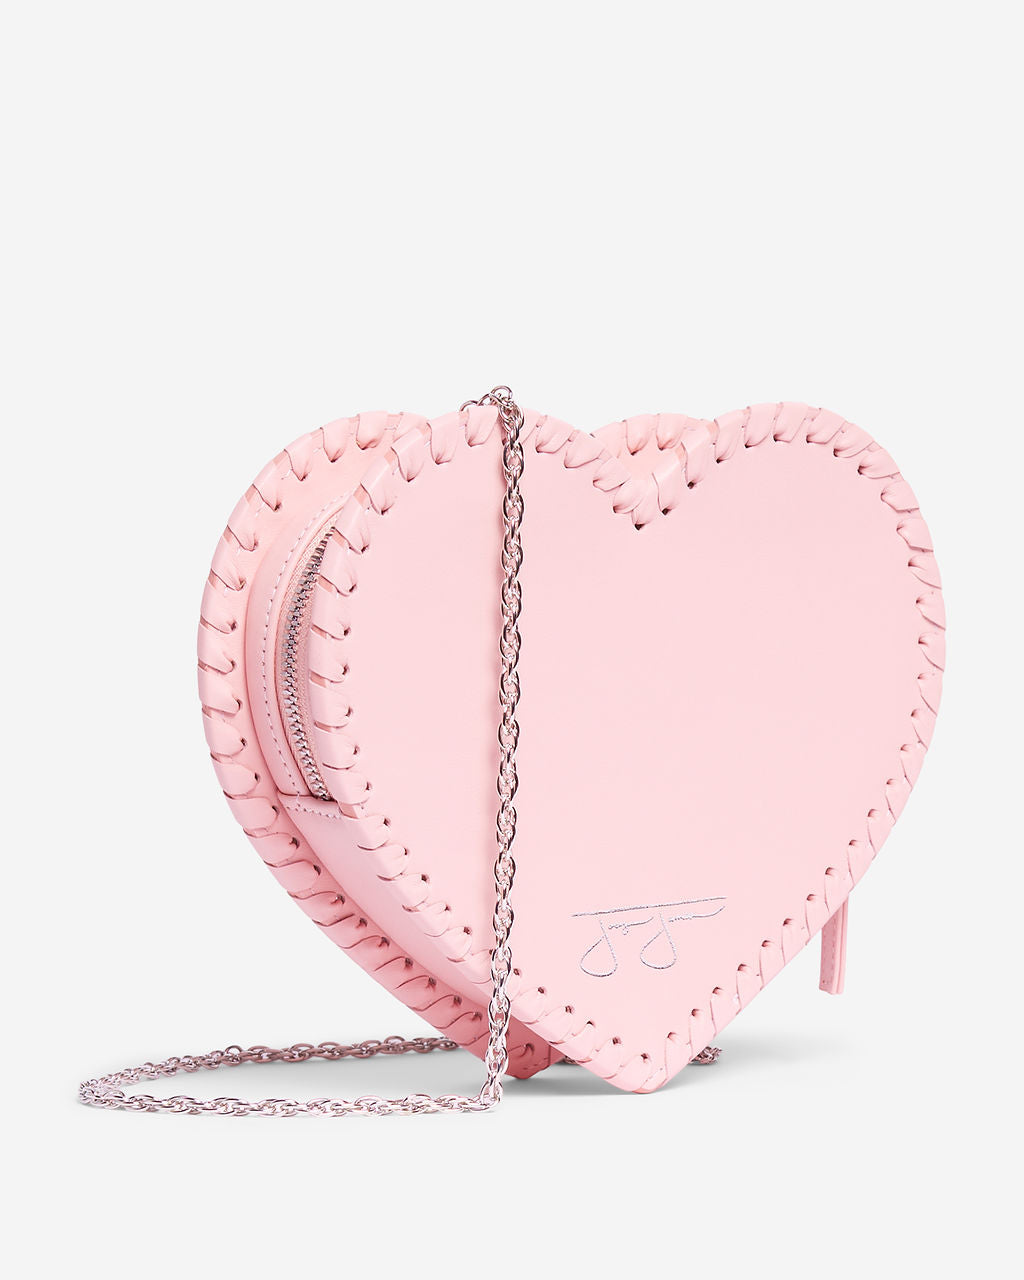 Reagan Heart Bag - Pale Pink Handbags Joey James, The Label   